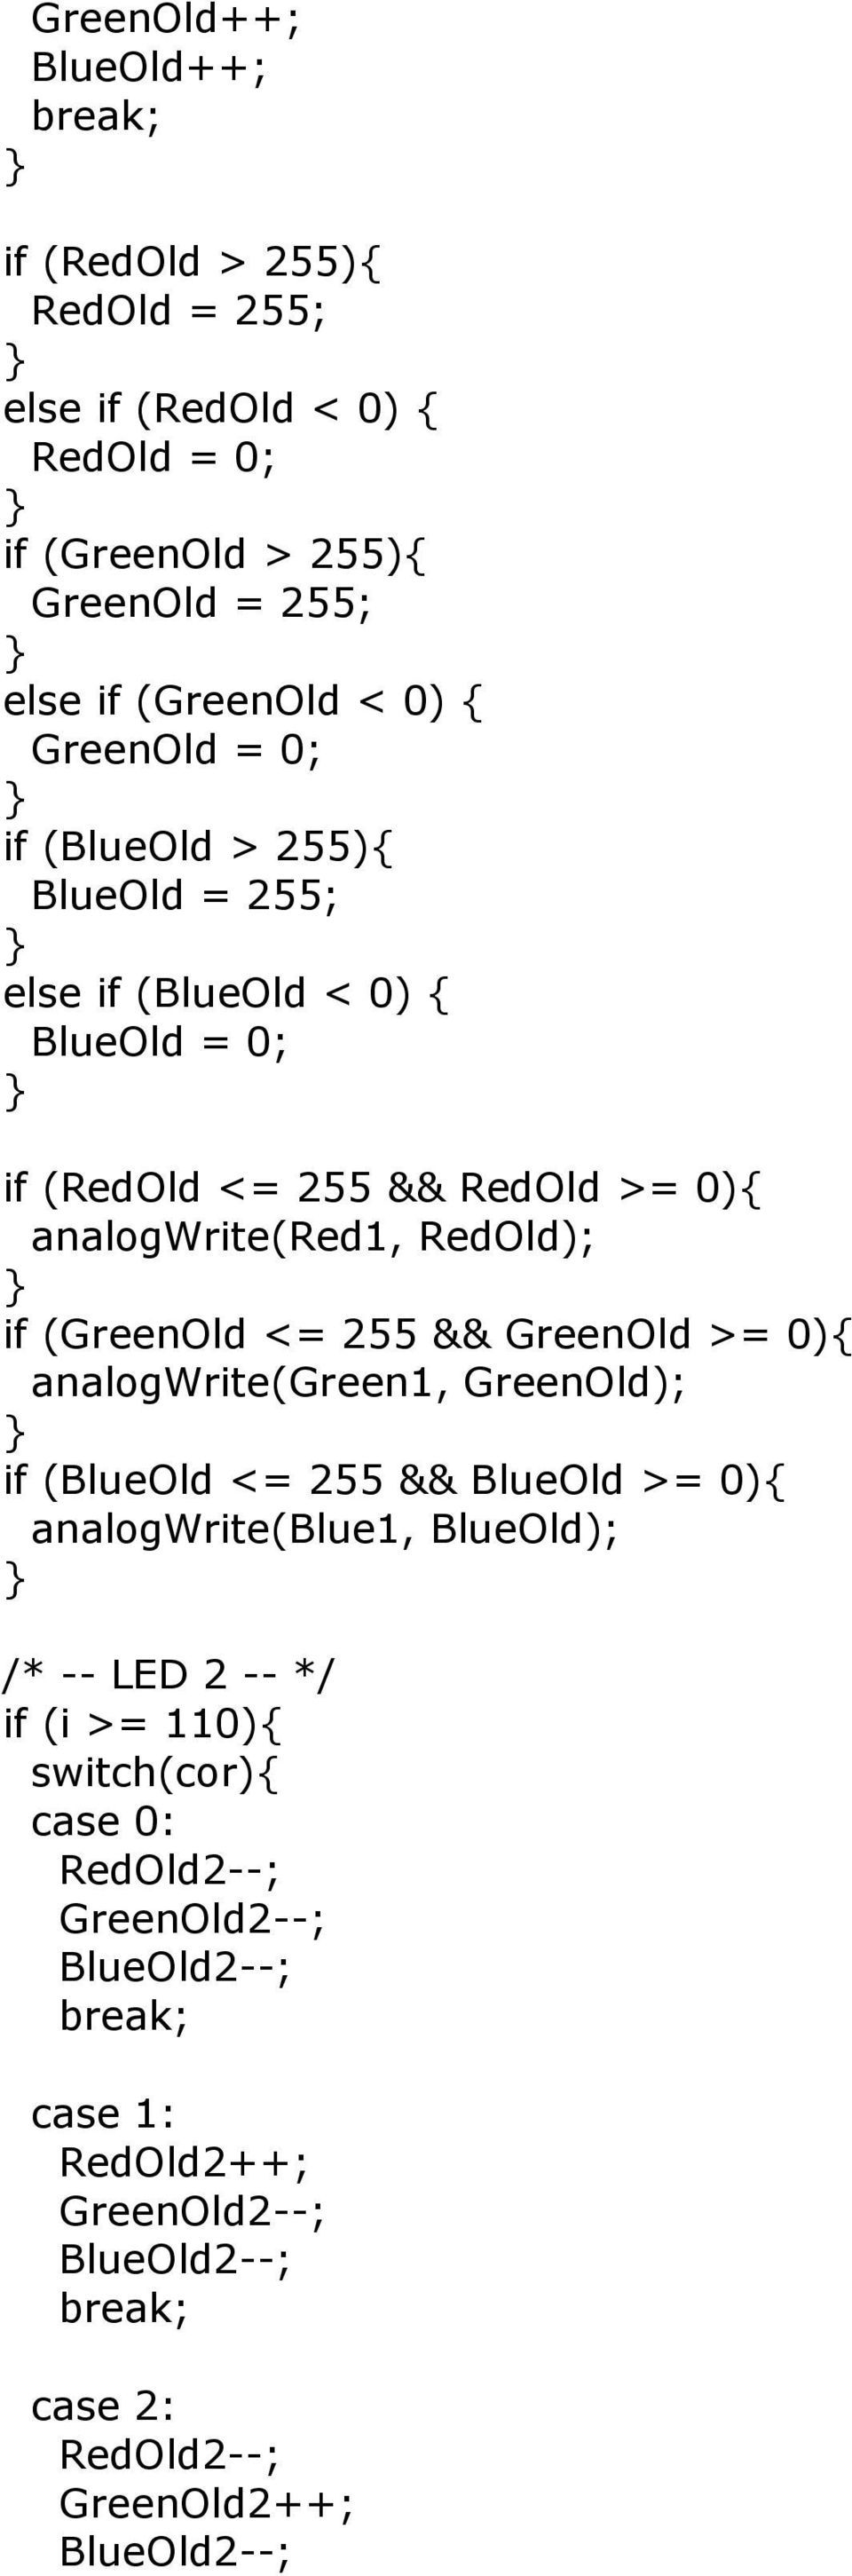 (GreenOld <= 255 && GreenOld >= 0){ analogwrite(green1, GreenOld); if (BlueOld <= 255 && BlueOld >= 0){ analogwrite(blue1, BlueOld); /* -- LED 2 -- */ if